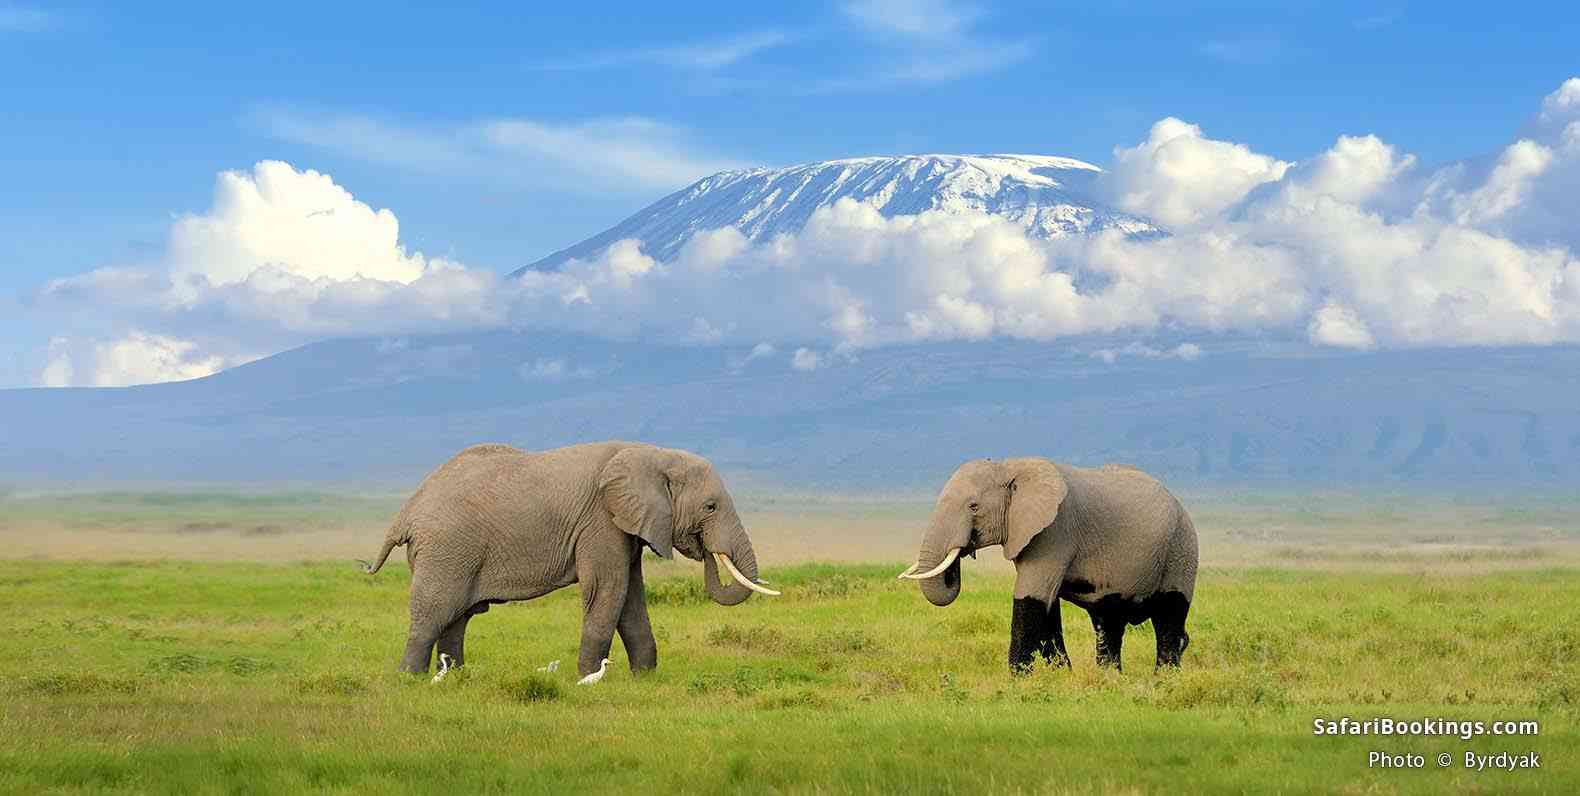 Elephants in front of Mount Kilimanjaro